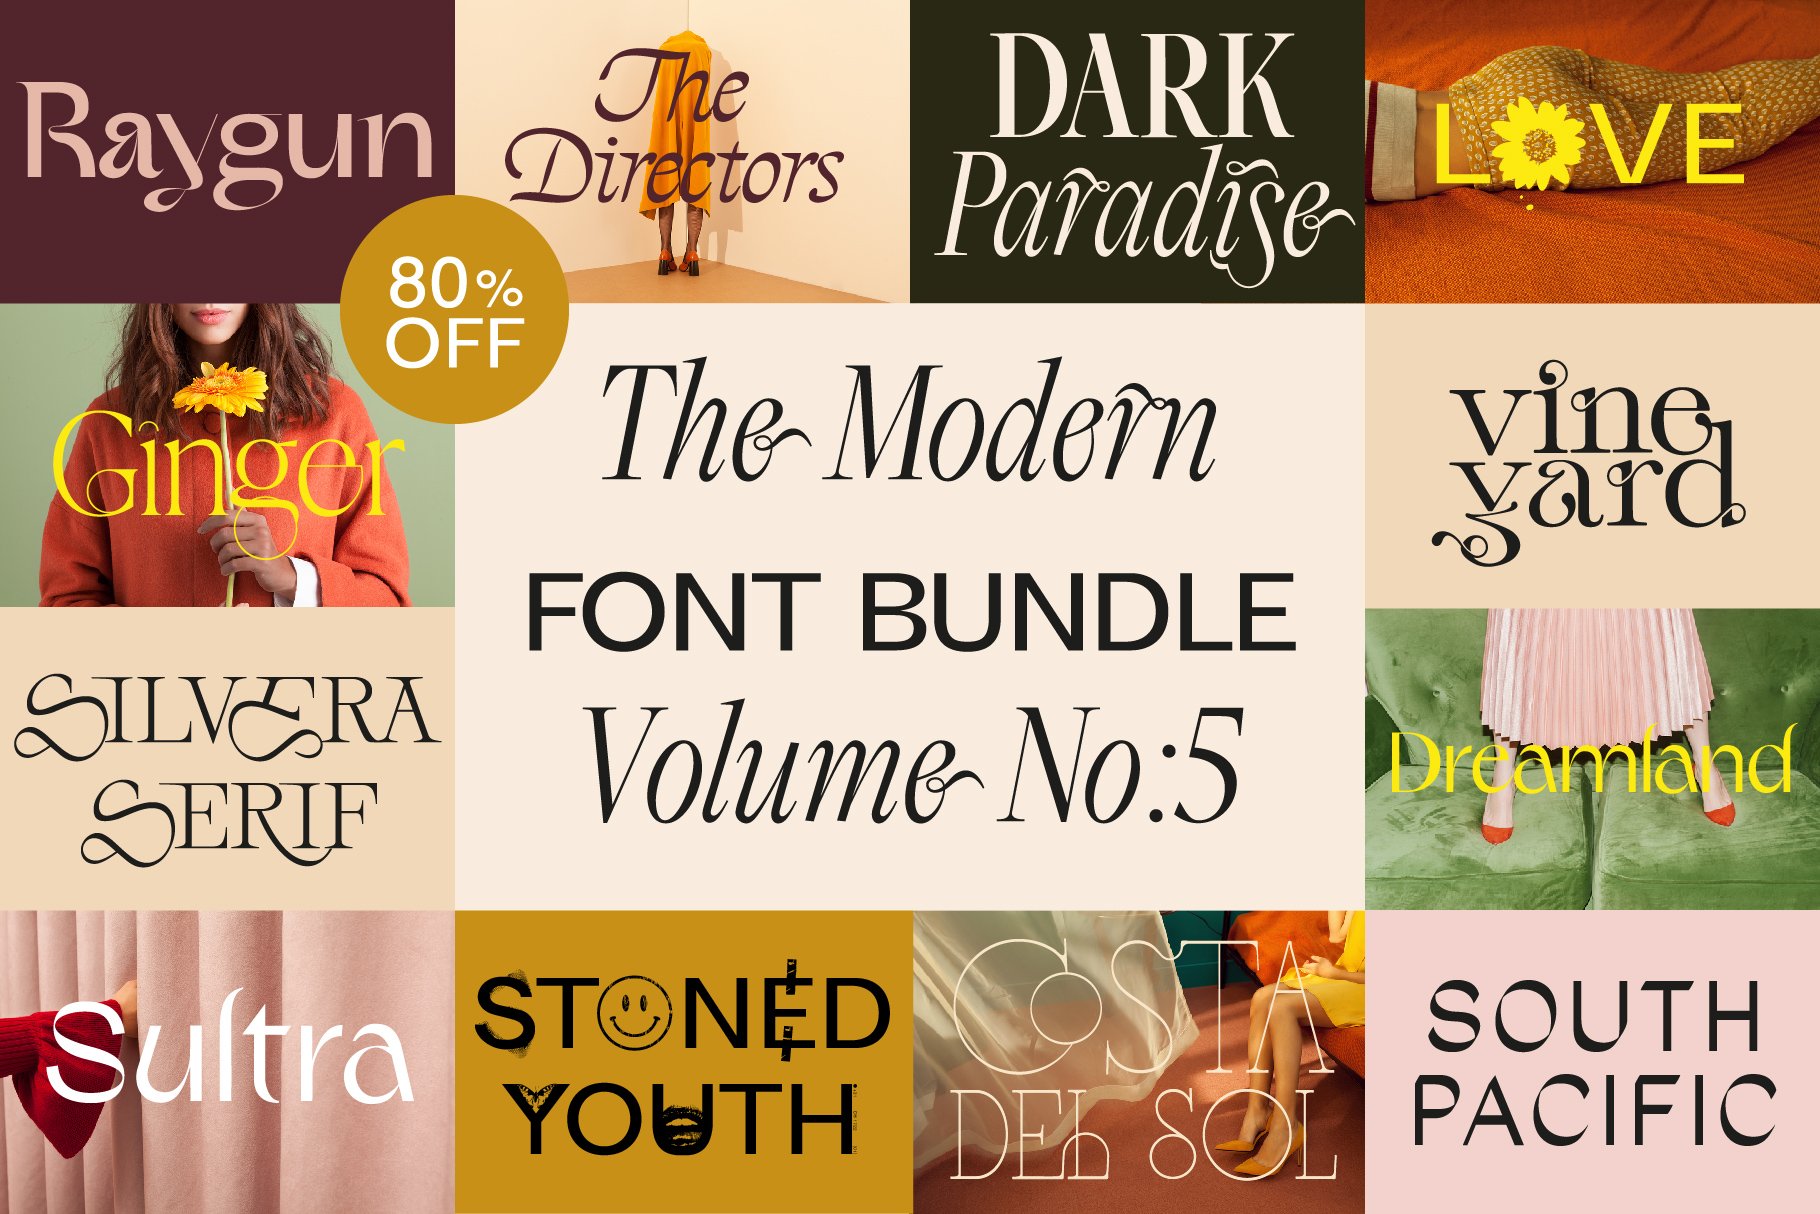 The Modern Font Bundle Vol.5 80% OFF cover image.